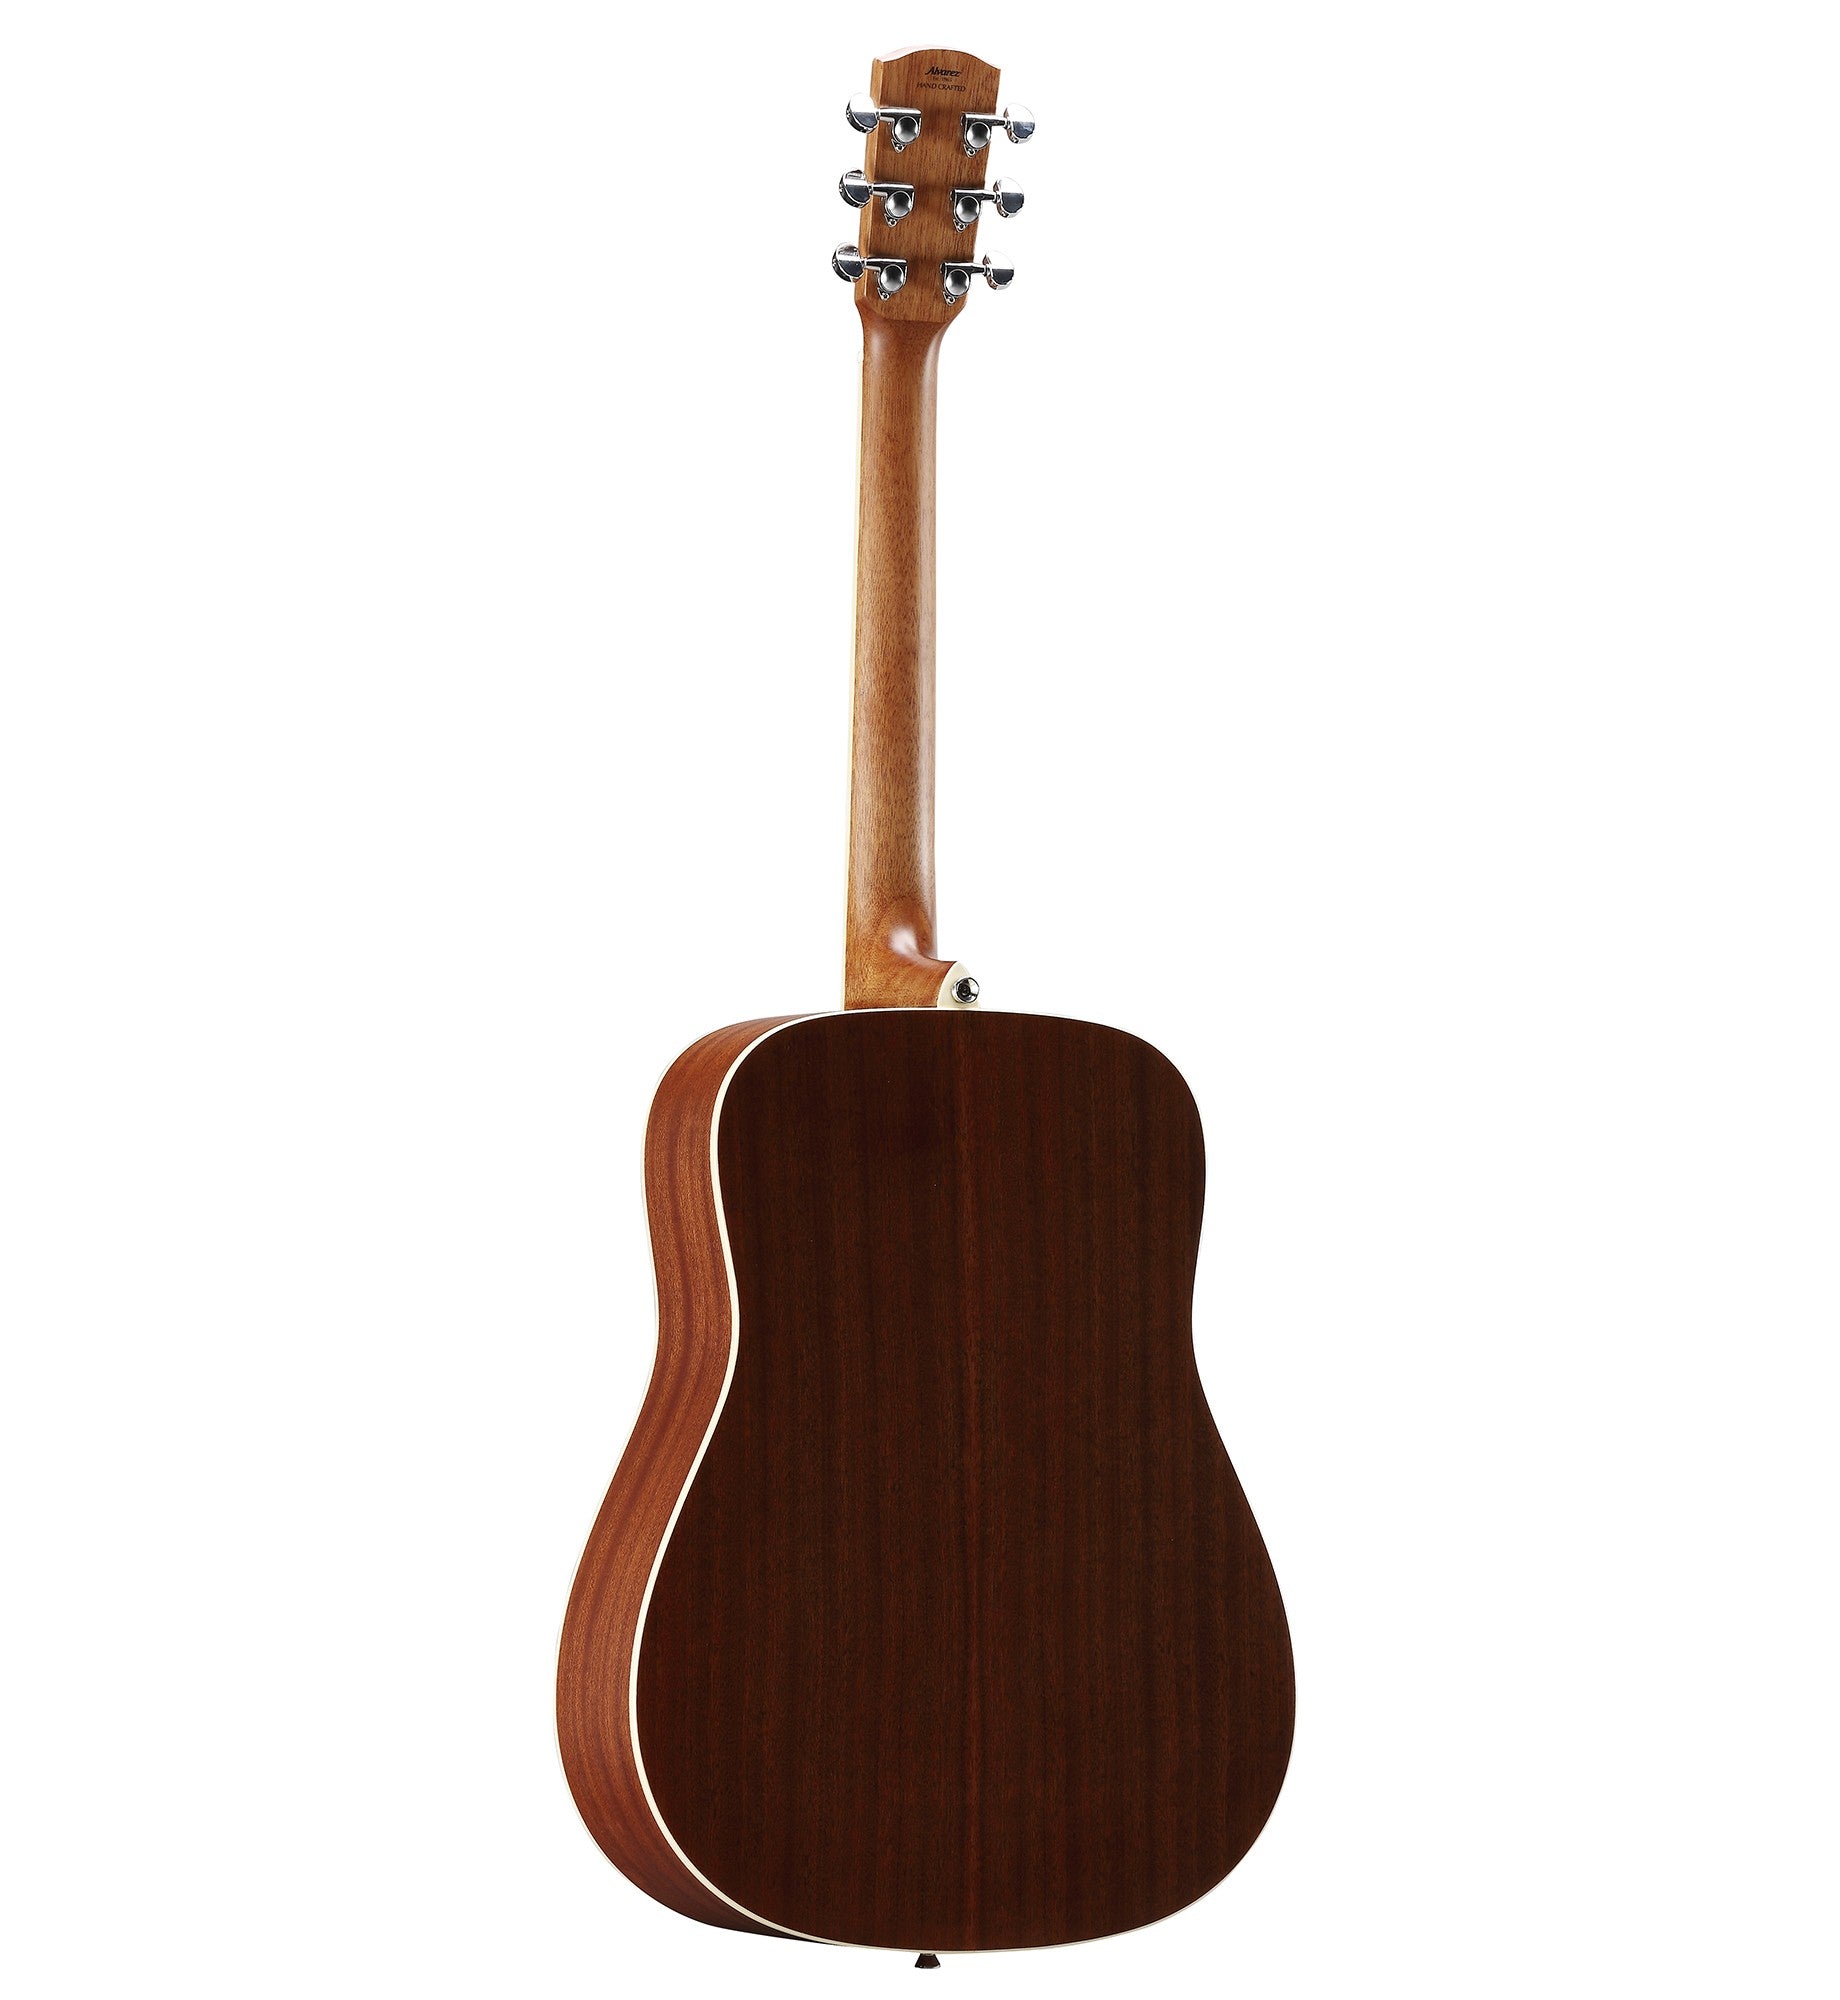 Alvarez Artist Series Dreadnought AD60 Guitar - Premium Guitars from Alvarez - Just $379.99! Shop now at Poppa's Music